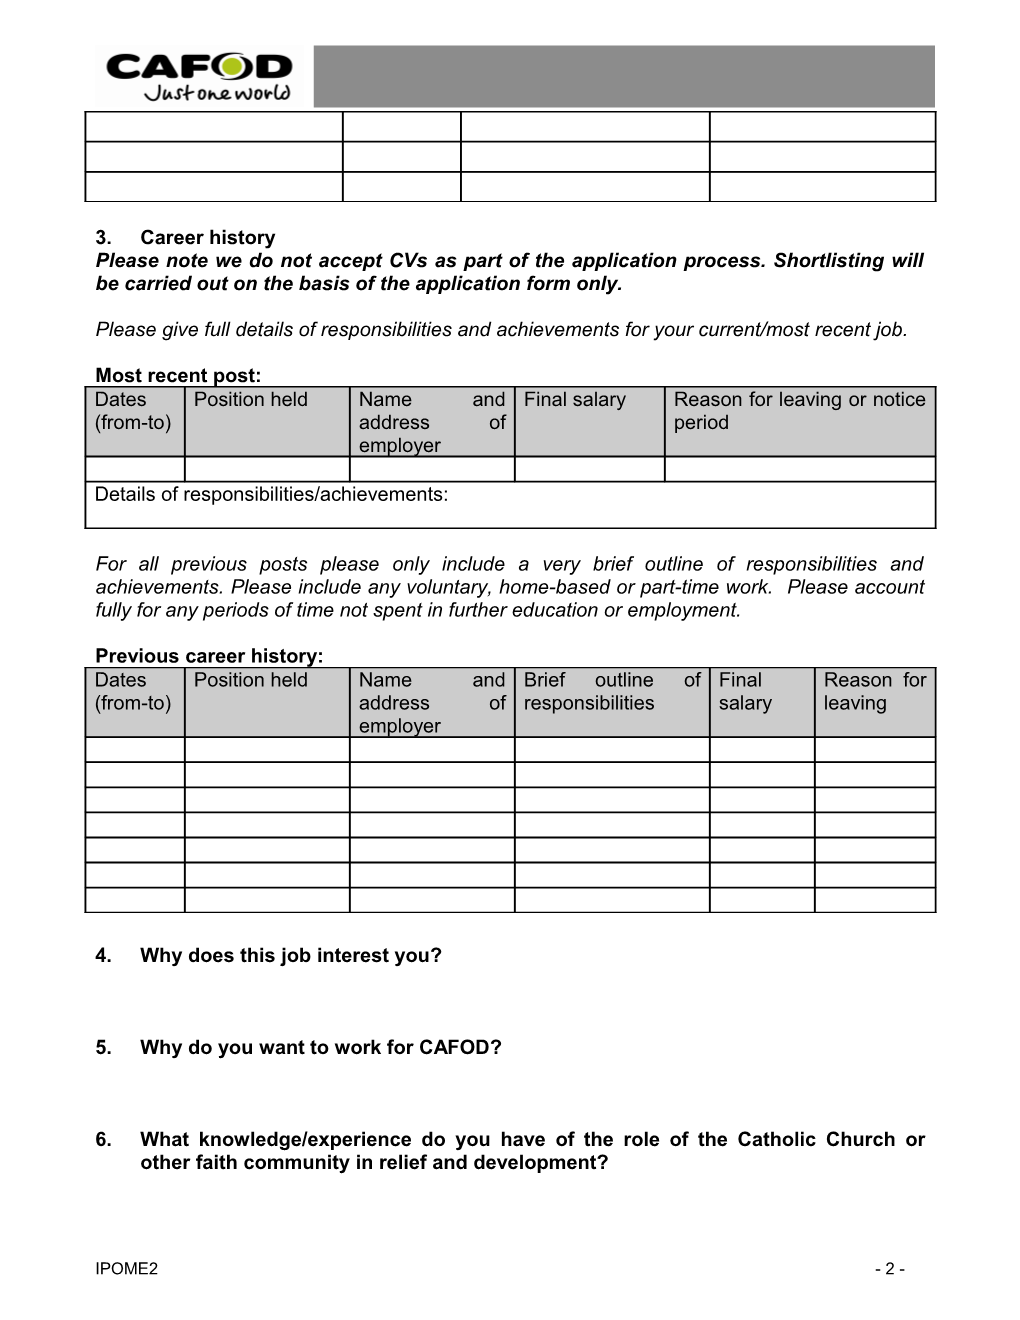 ID UK-Based Application Form